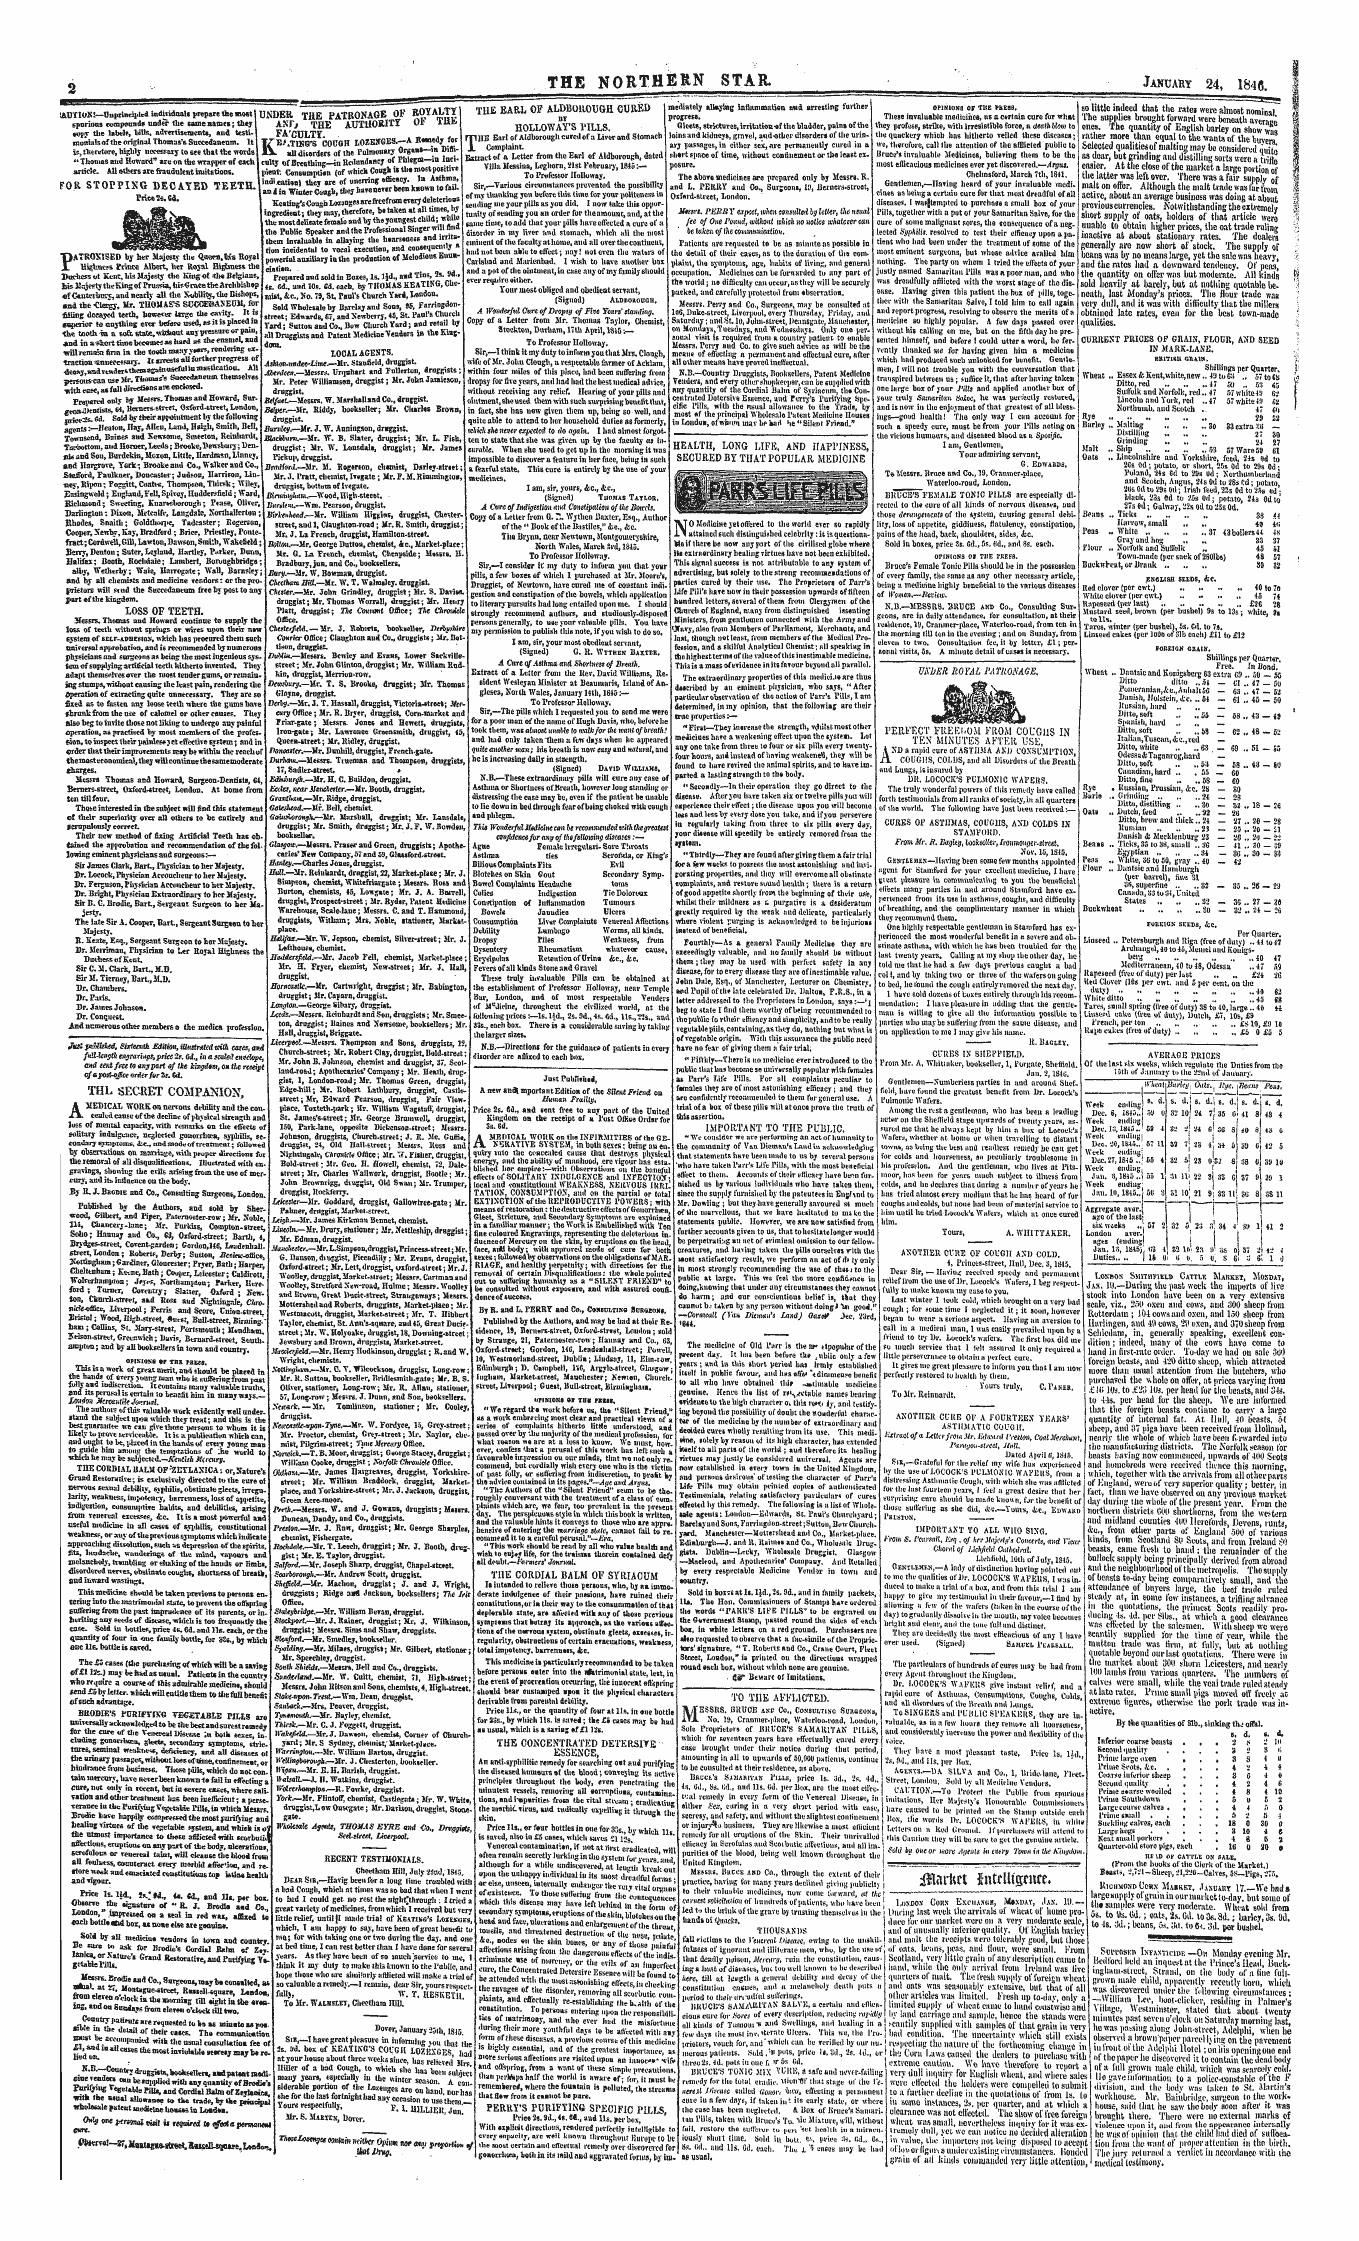 Northern Star (1837-1852): jS F Y, 1st edition - Itefcet Toitdltgrnw